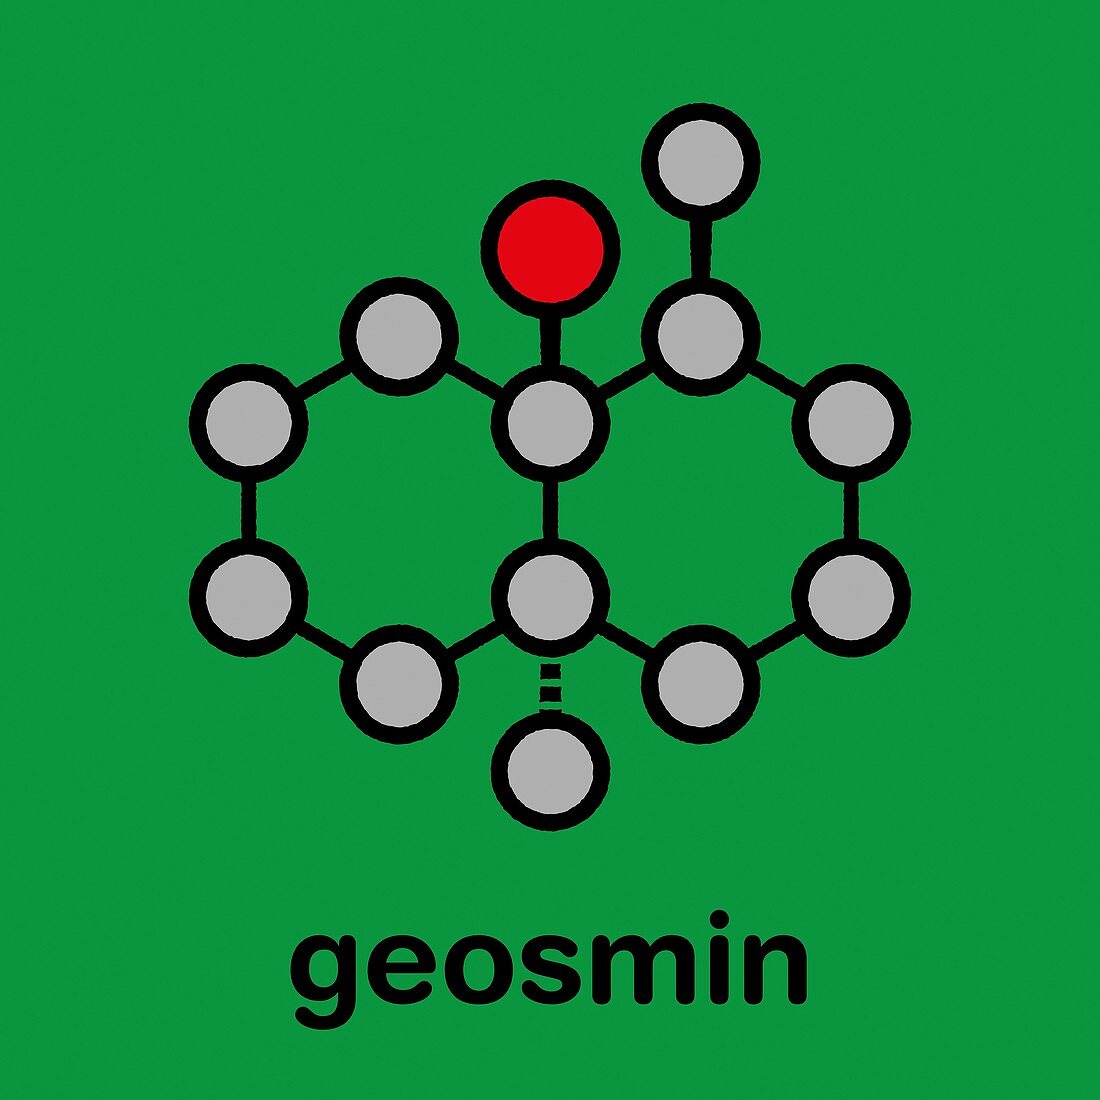 Geosmin earthy flavour molecule, illustration